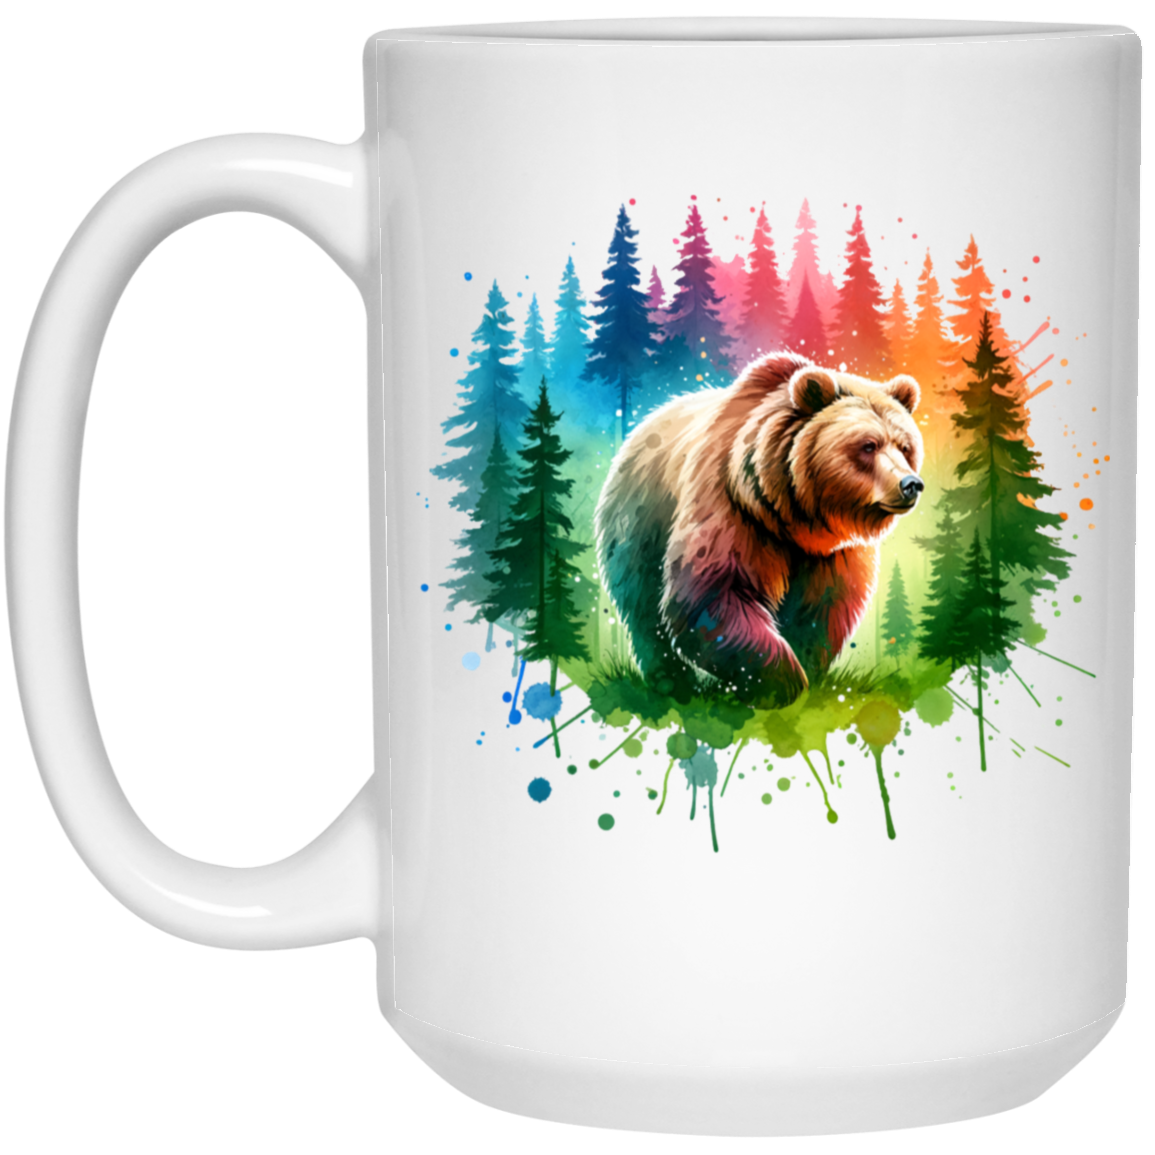 Grizzly Bear Walking - Mugs